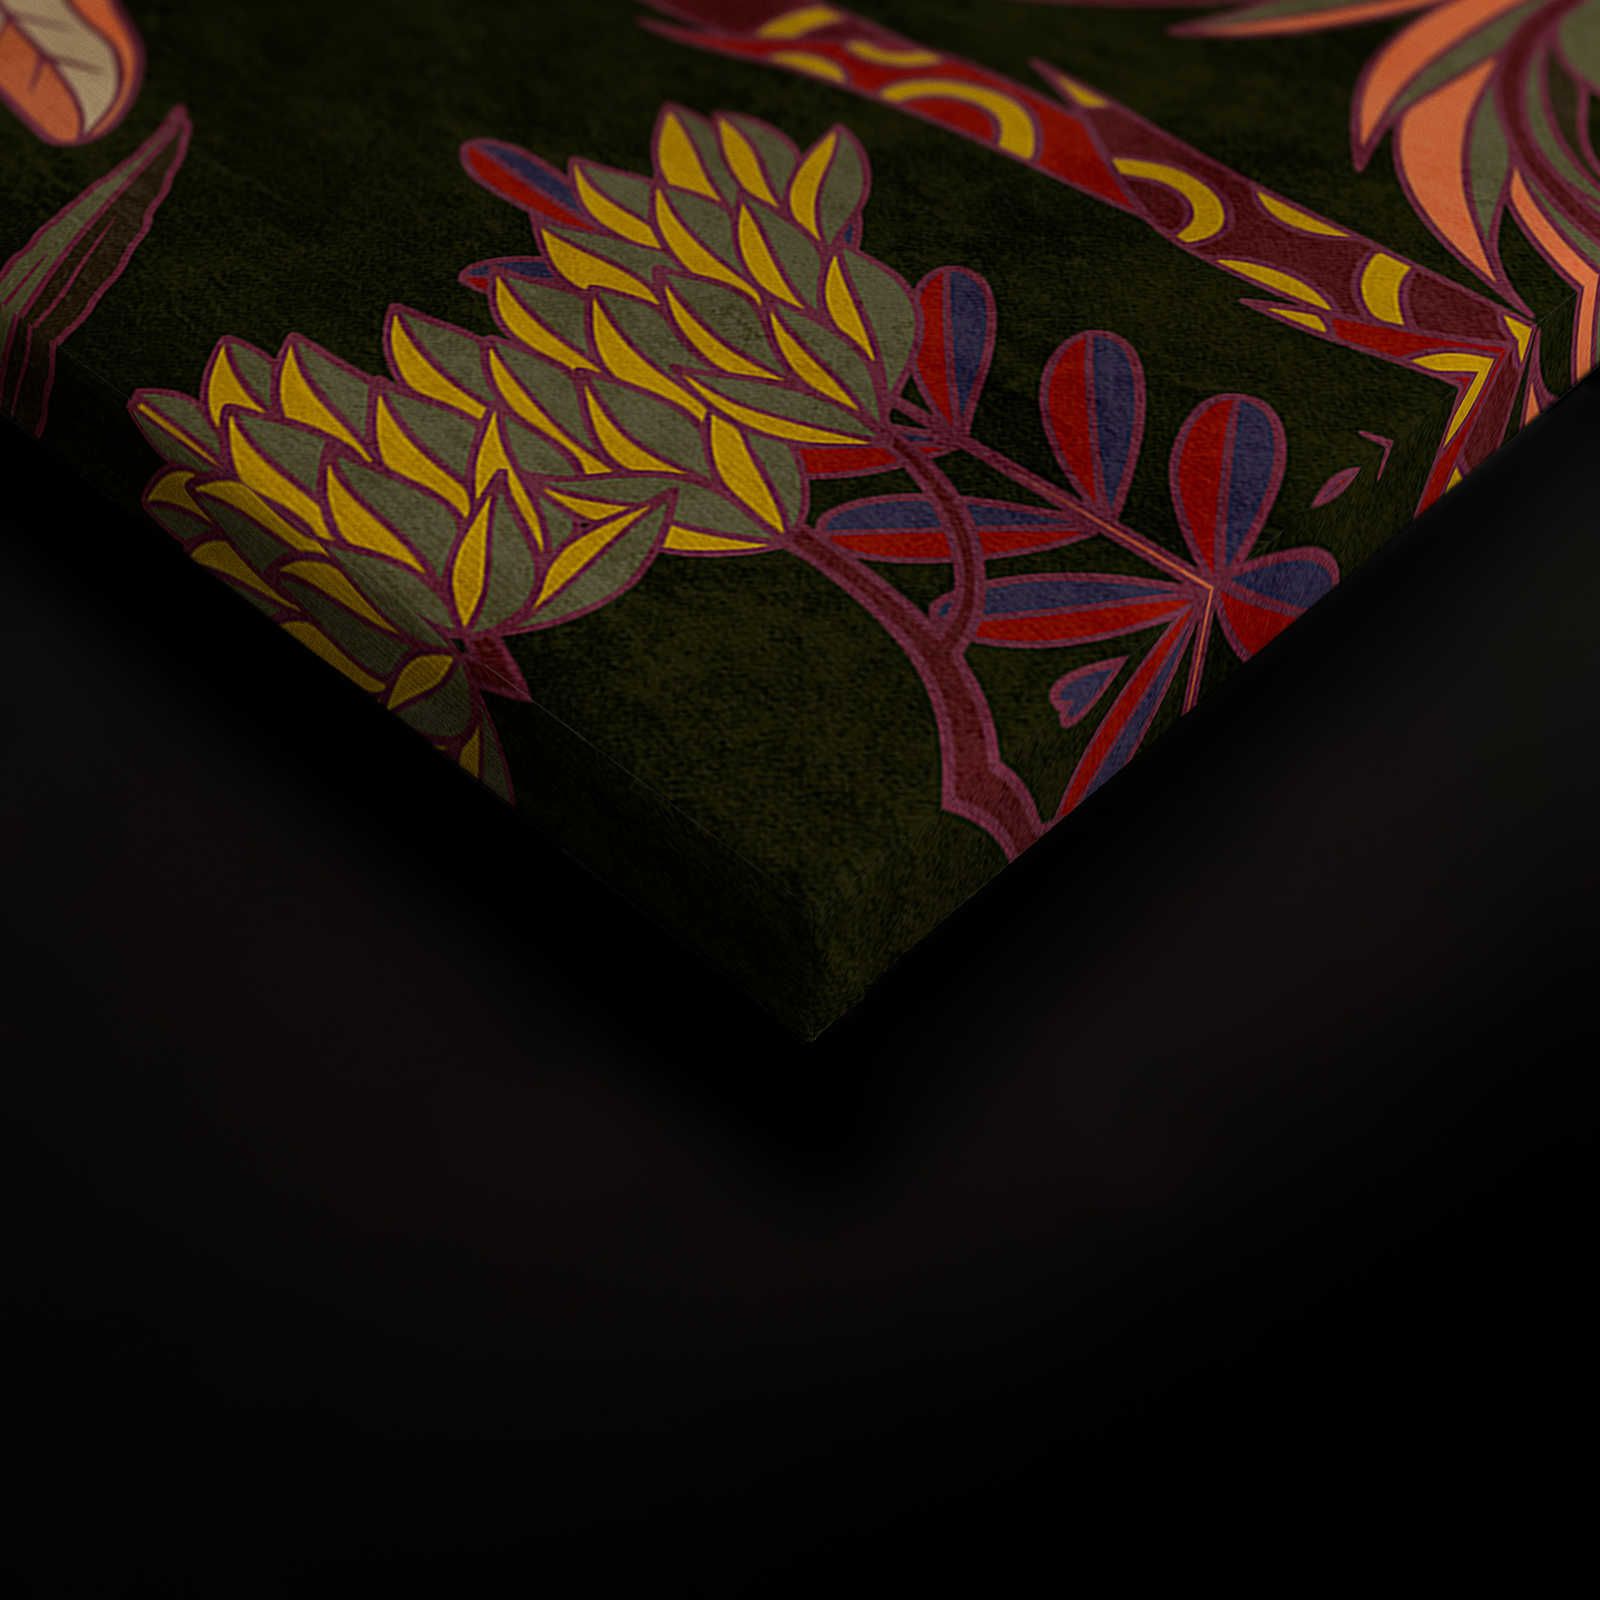             Lagos 1 - Palmen Leinwandbild bunter Grafik Stil im Textillook – 0,90 m x 0,60 m
        